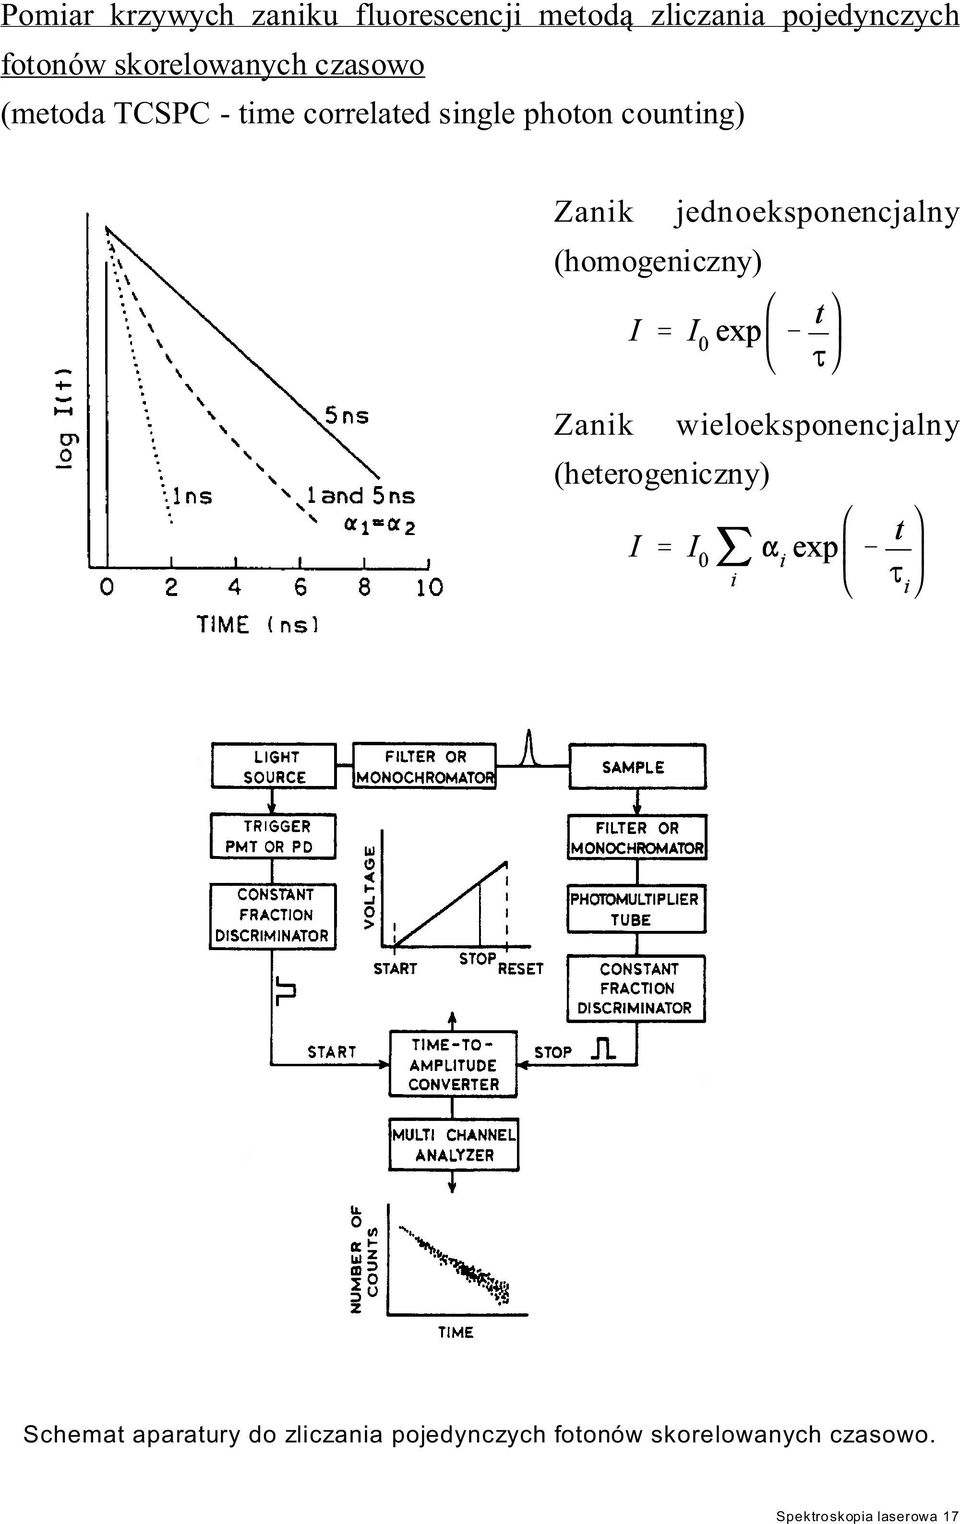 (homogeniczny) jednoeksponencjalny Zanik (heterogeniczny) wieloeksponencjalny